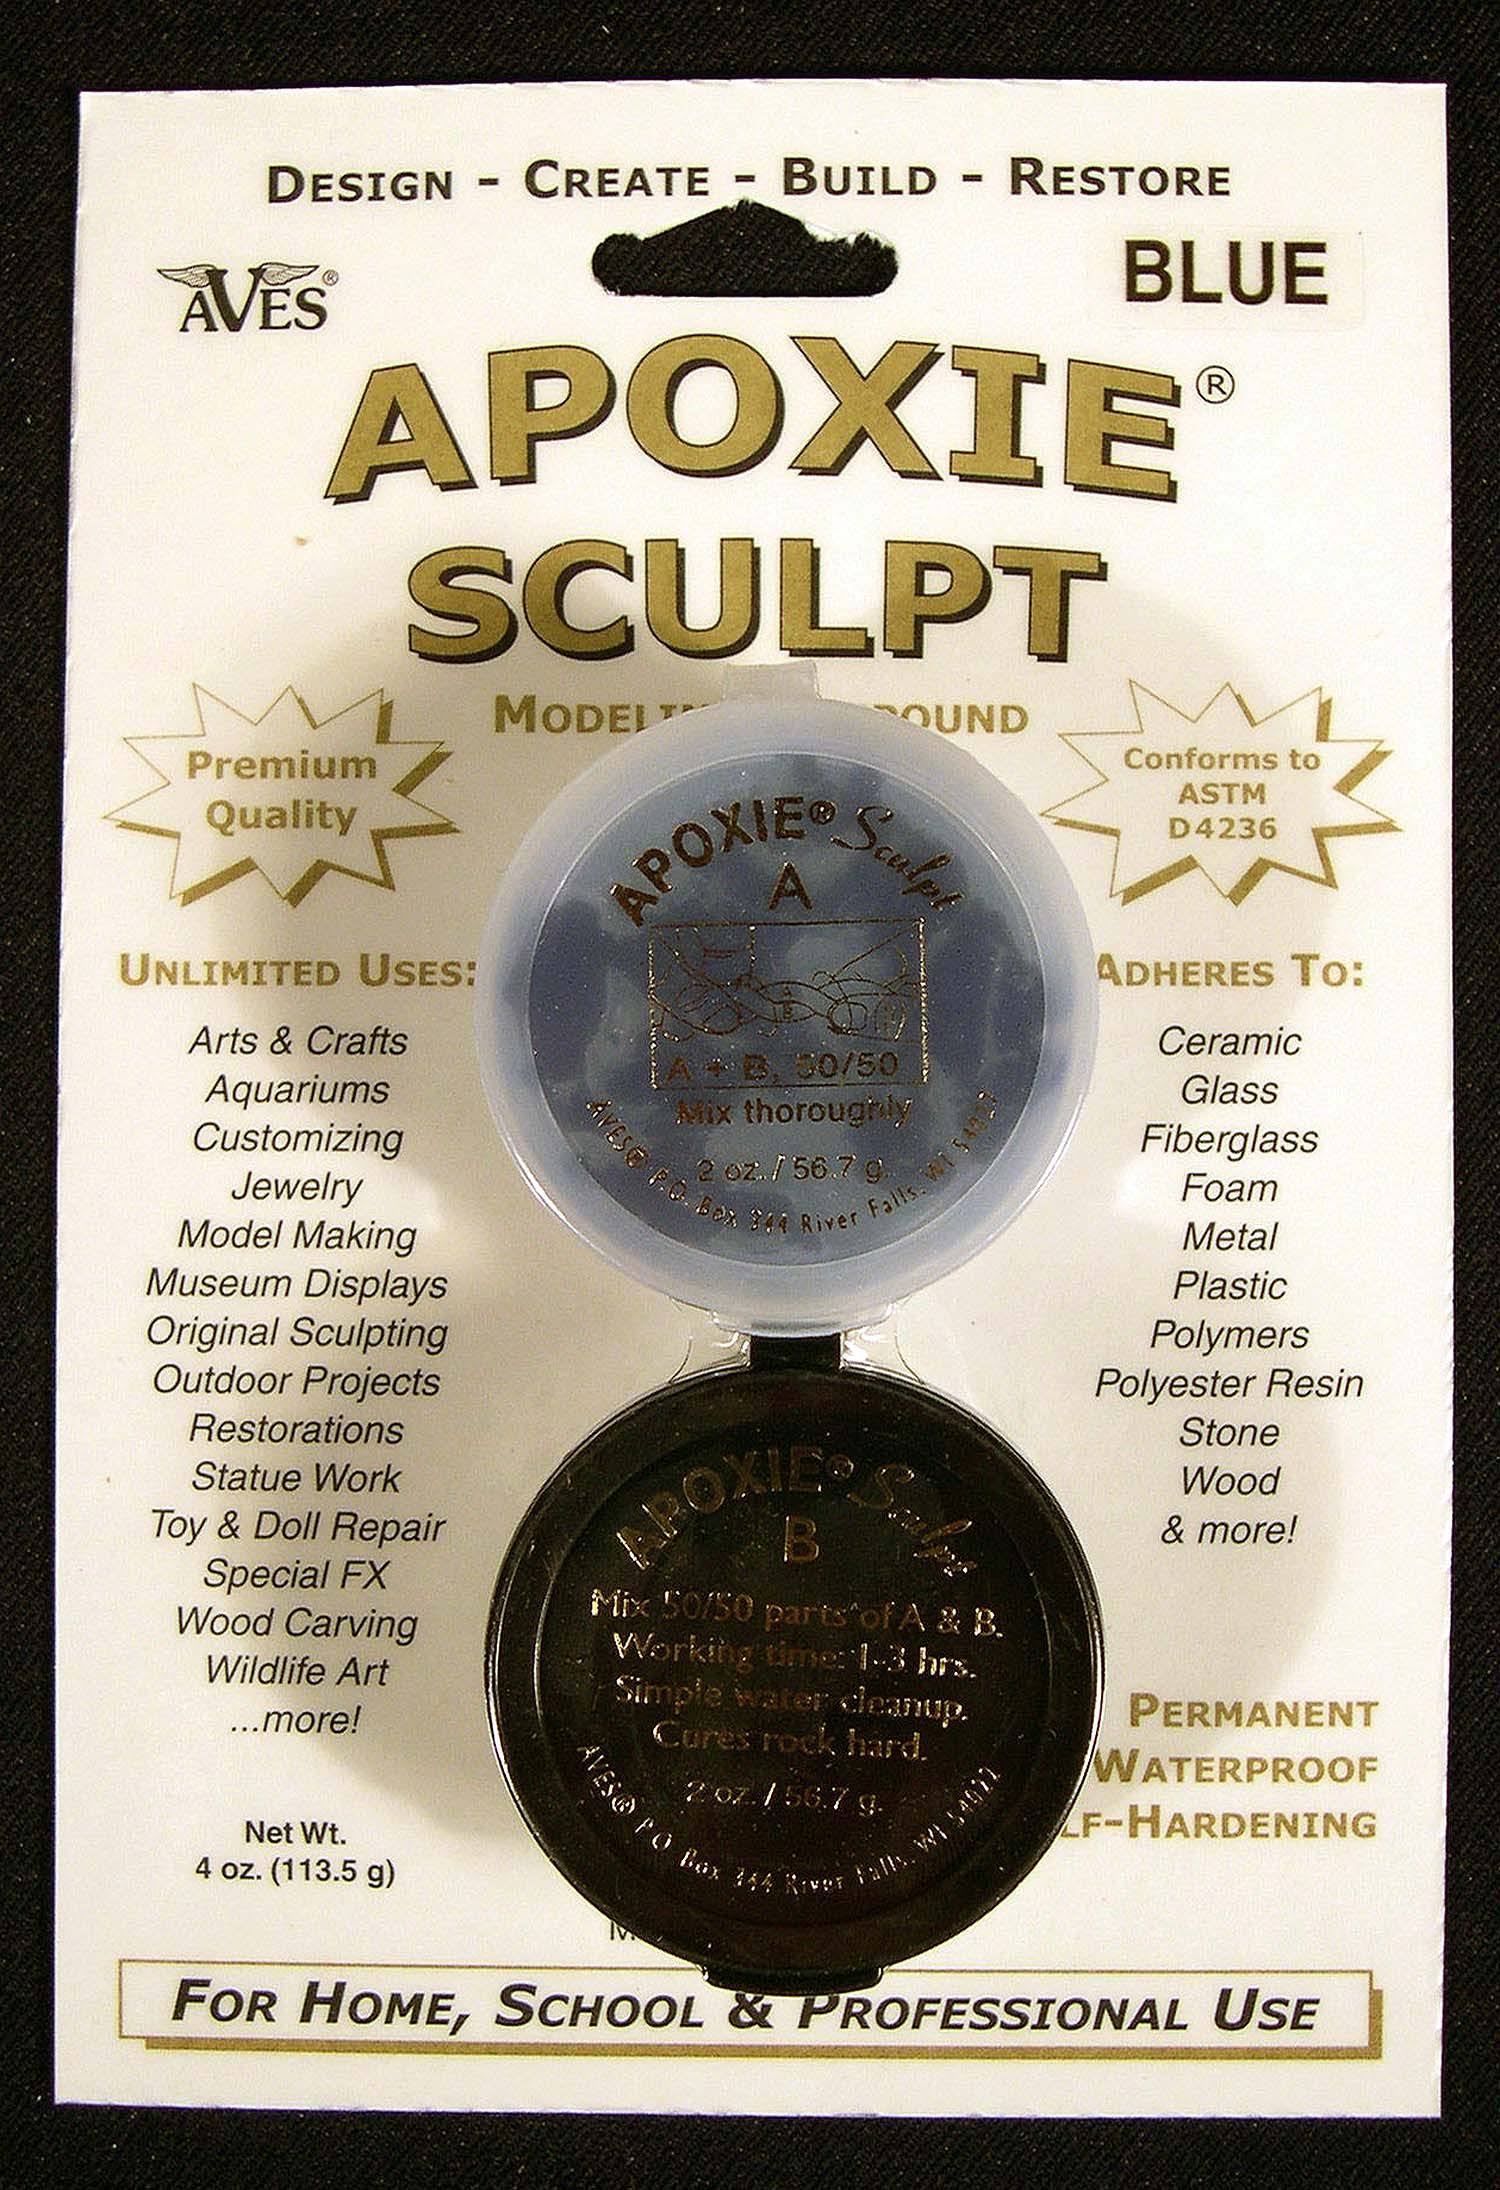 Aves Apoxie Sculpt Blue 2-Part Self-Hardening Modeling Compound 1/4 lb